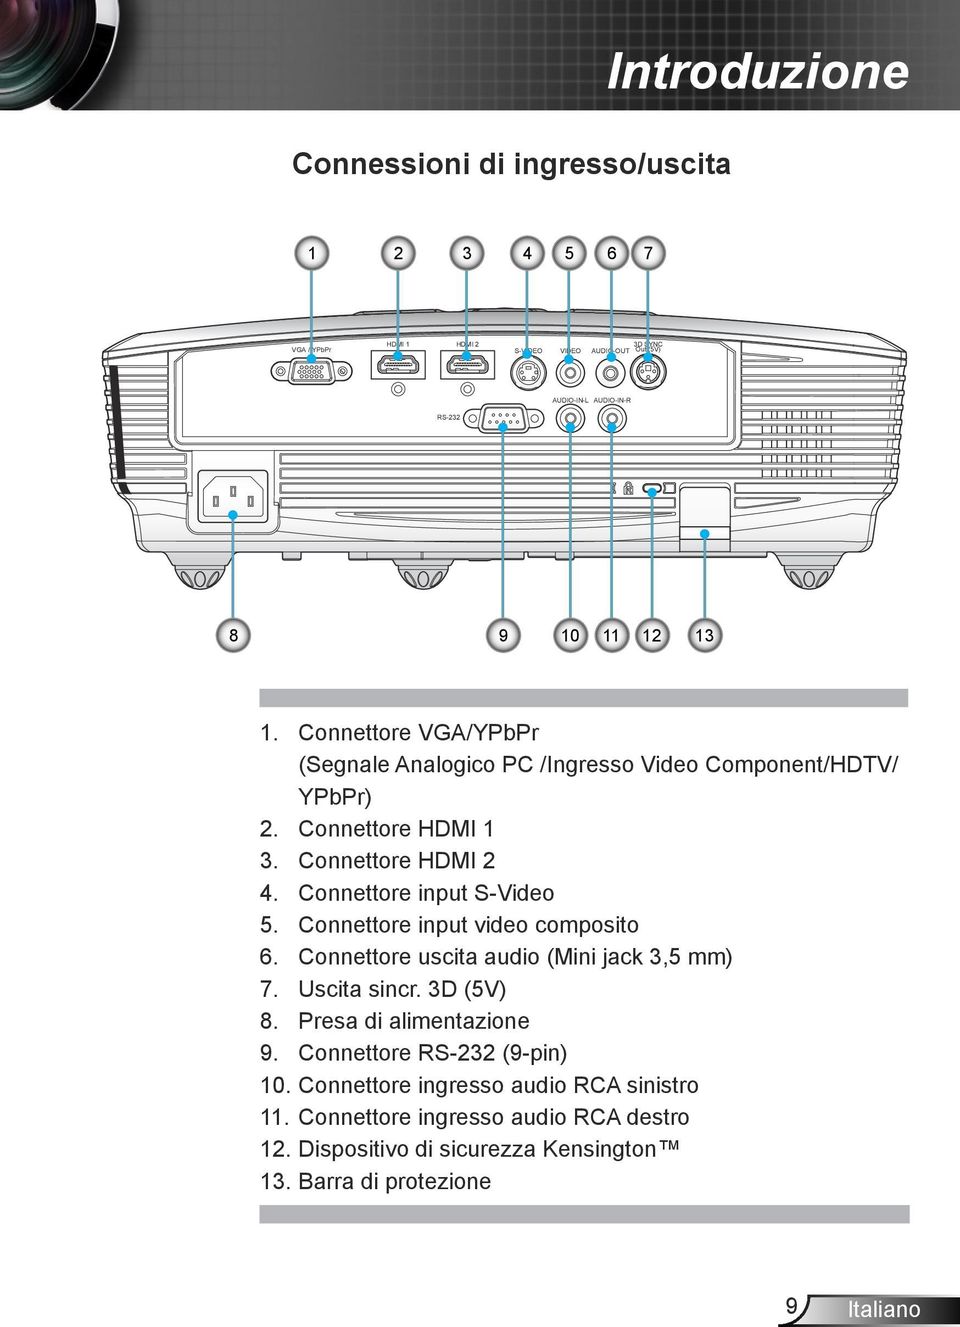 Connettore input S-Video 5. Connettore input video composito 6. Connettore uscita audio (Mini jack 3,5 mm) 7. Uscita sincr. 3D (5V) 8.